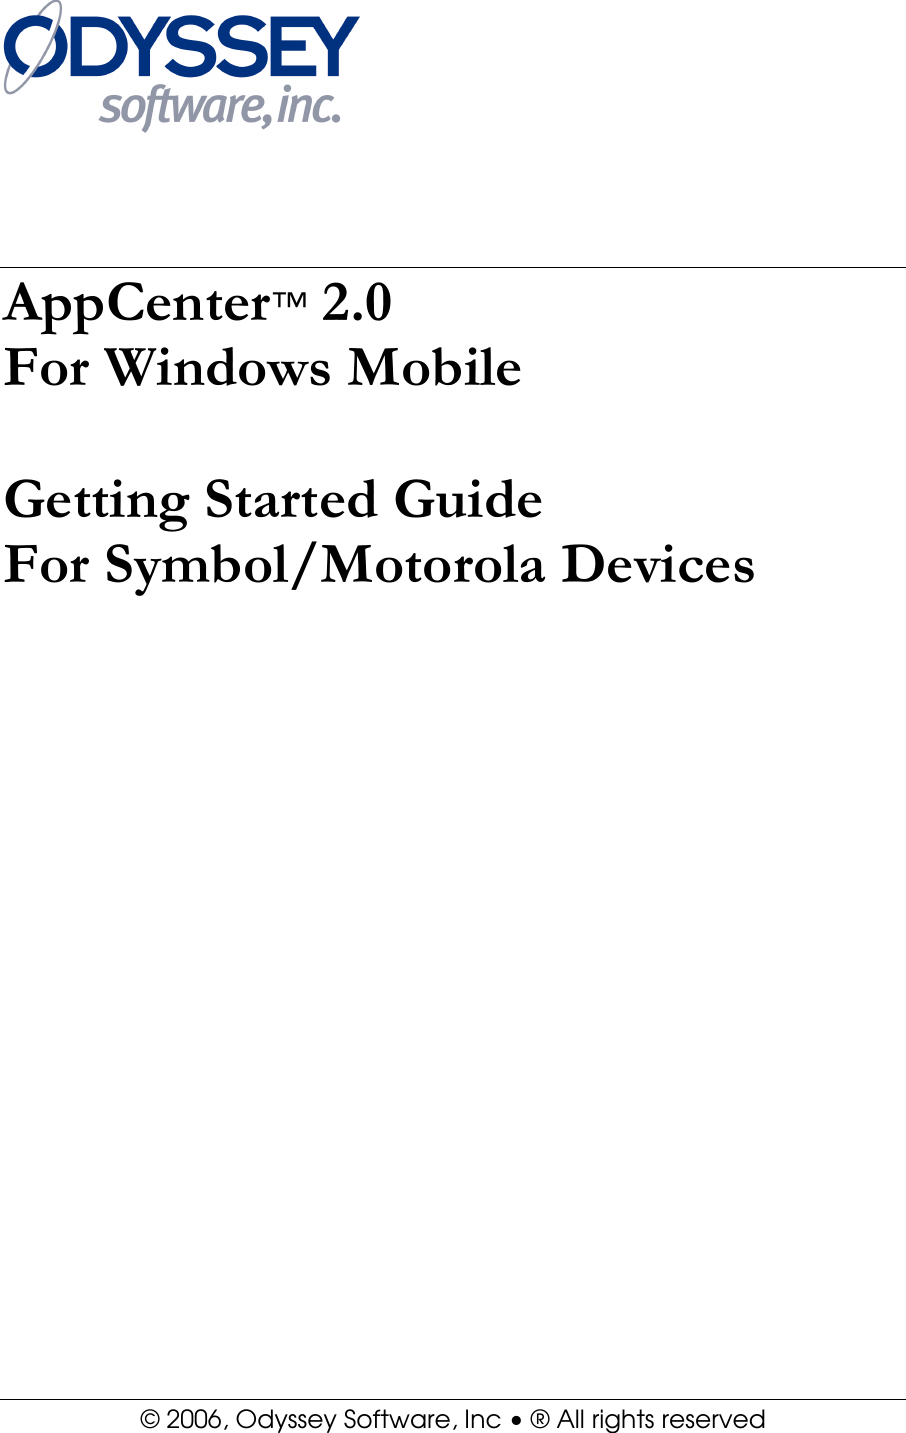 Page 1 of 6 - AppCenter 2.0 WM Getting Started Guide _Symbol-Motorola_ App Center (Symbol-Motorola)